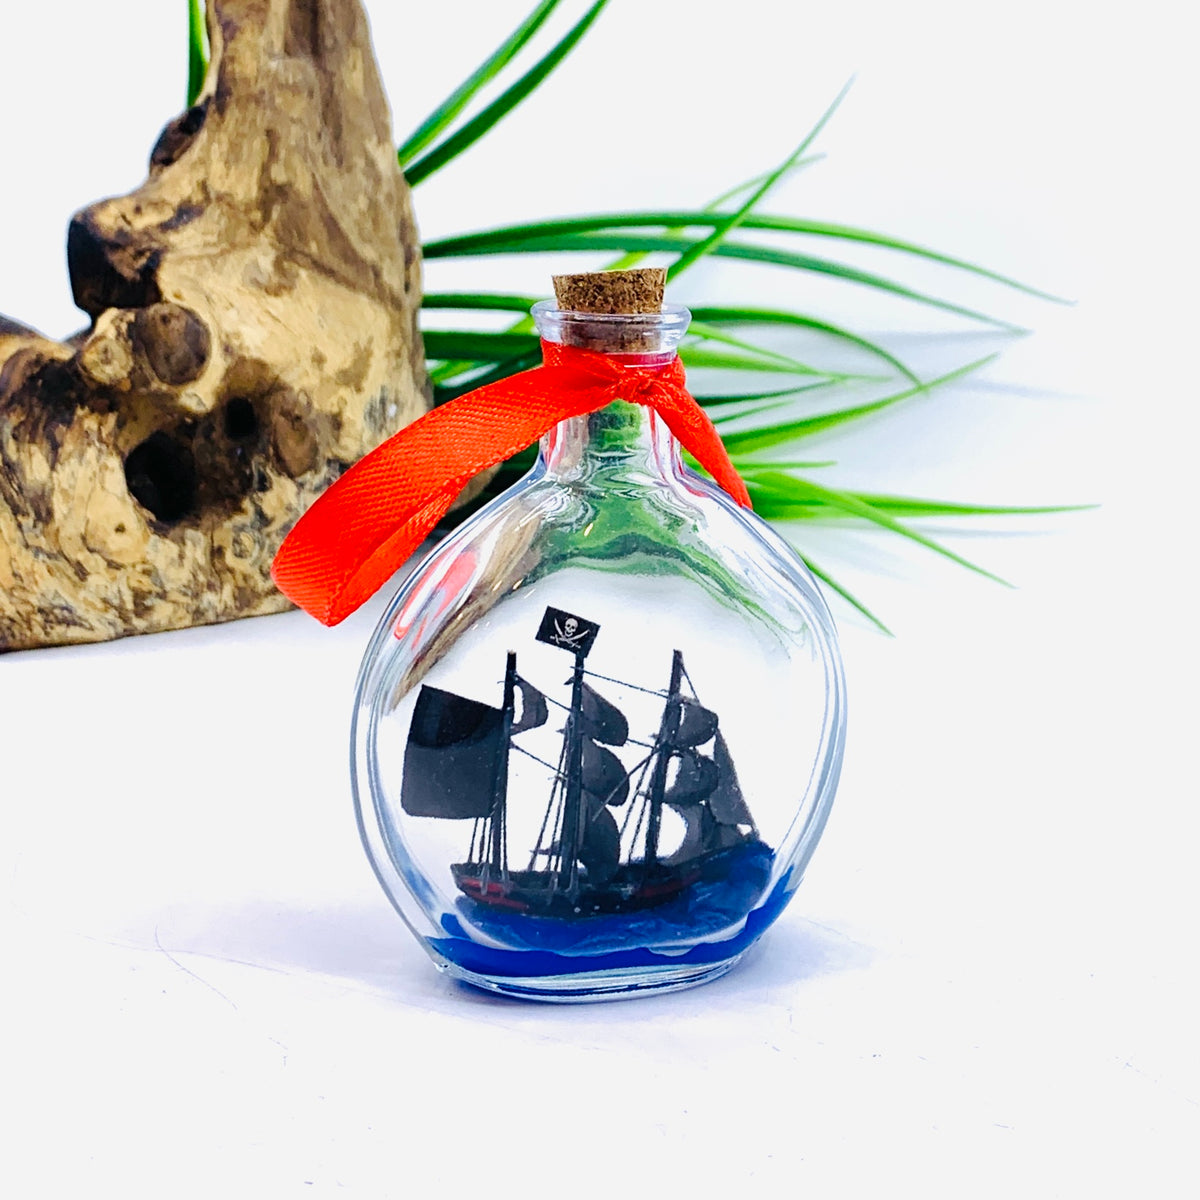 Pirate Ship in a Bottle Ornament